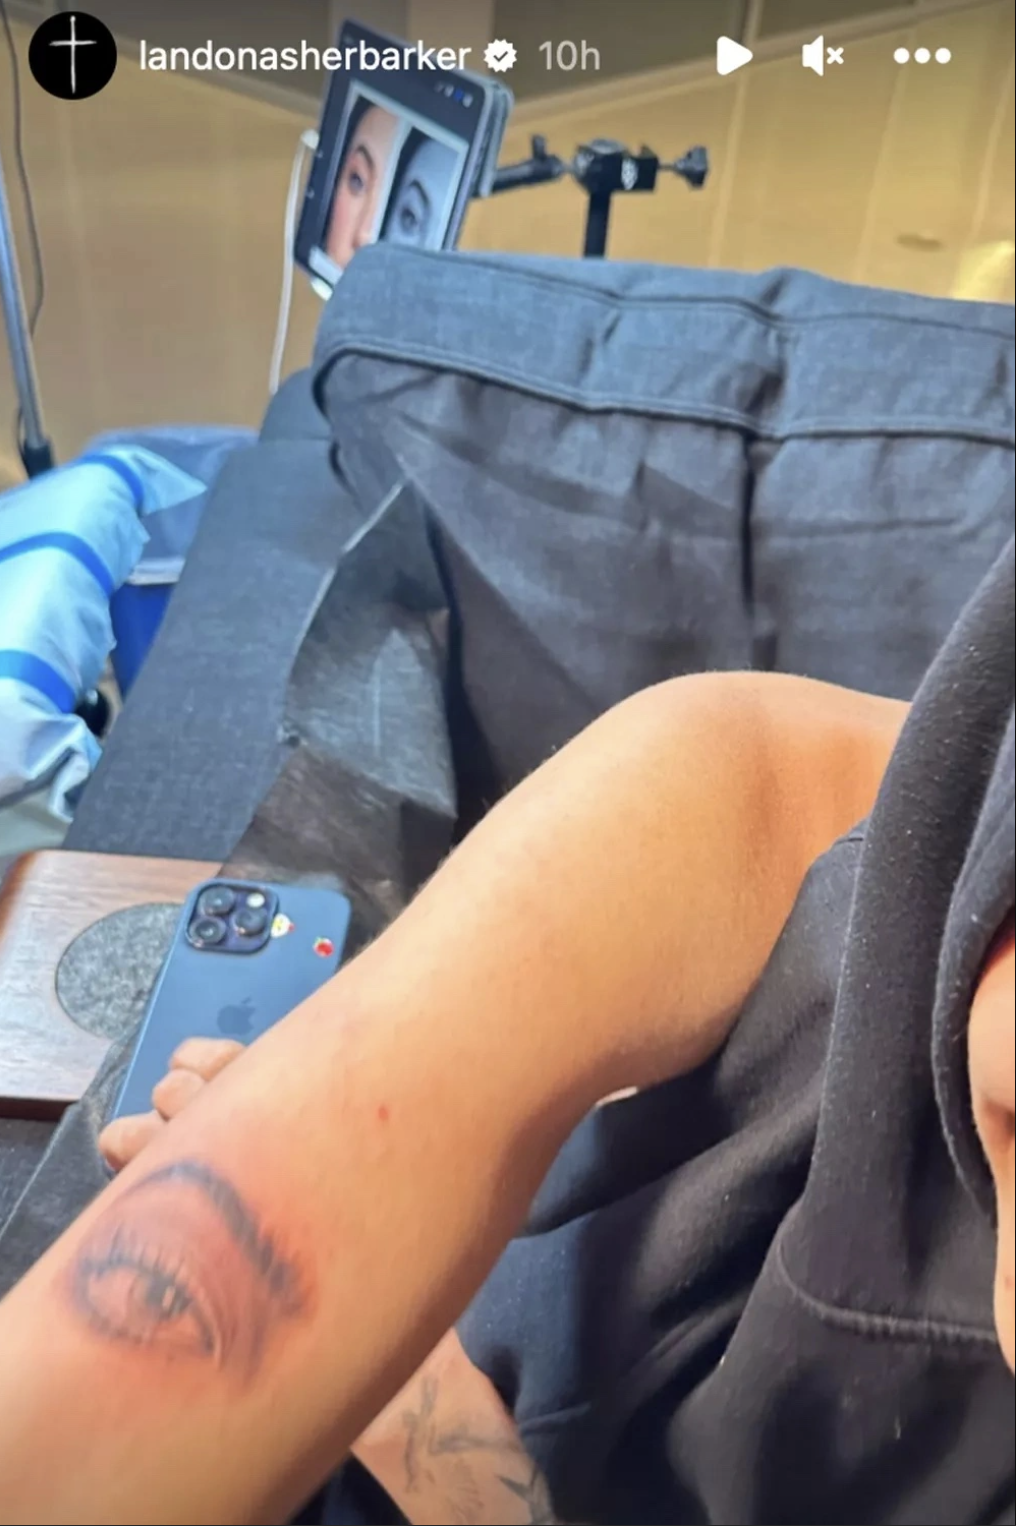 Charli DAmelio Gets New Tattoo On Wrist Photos  Hollywood Life